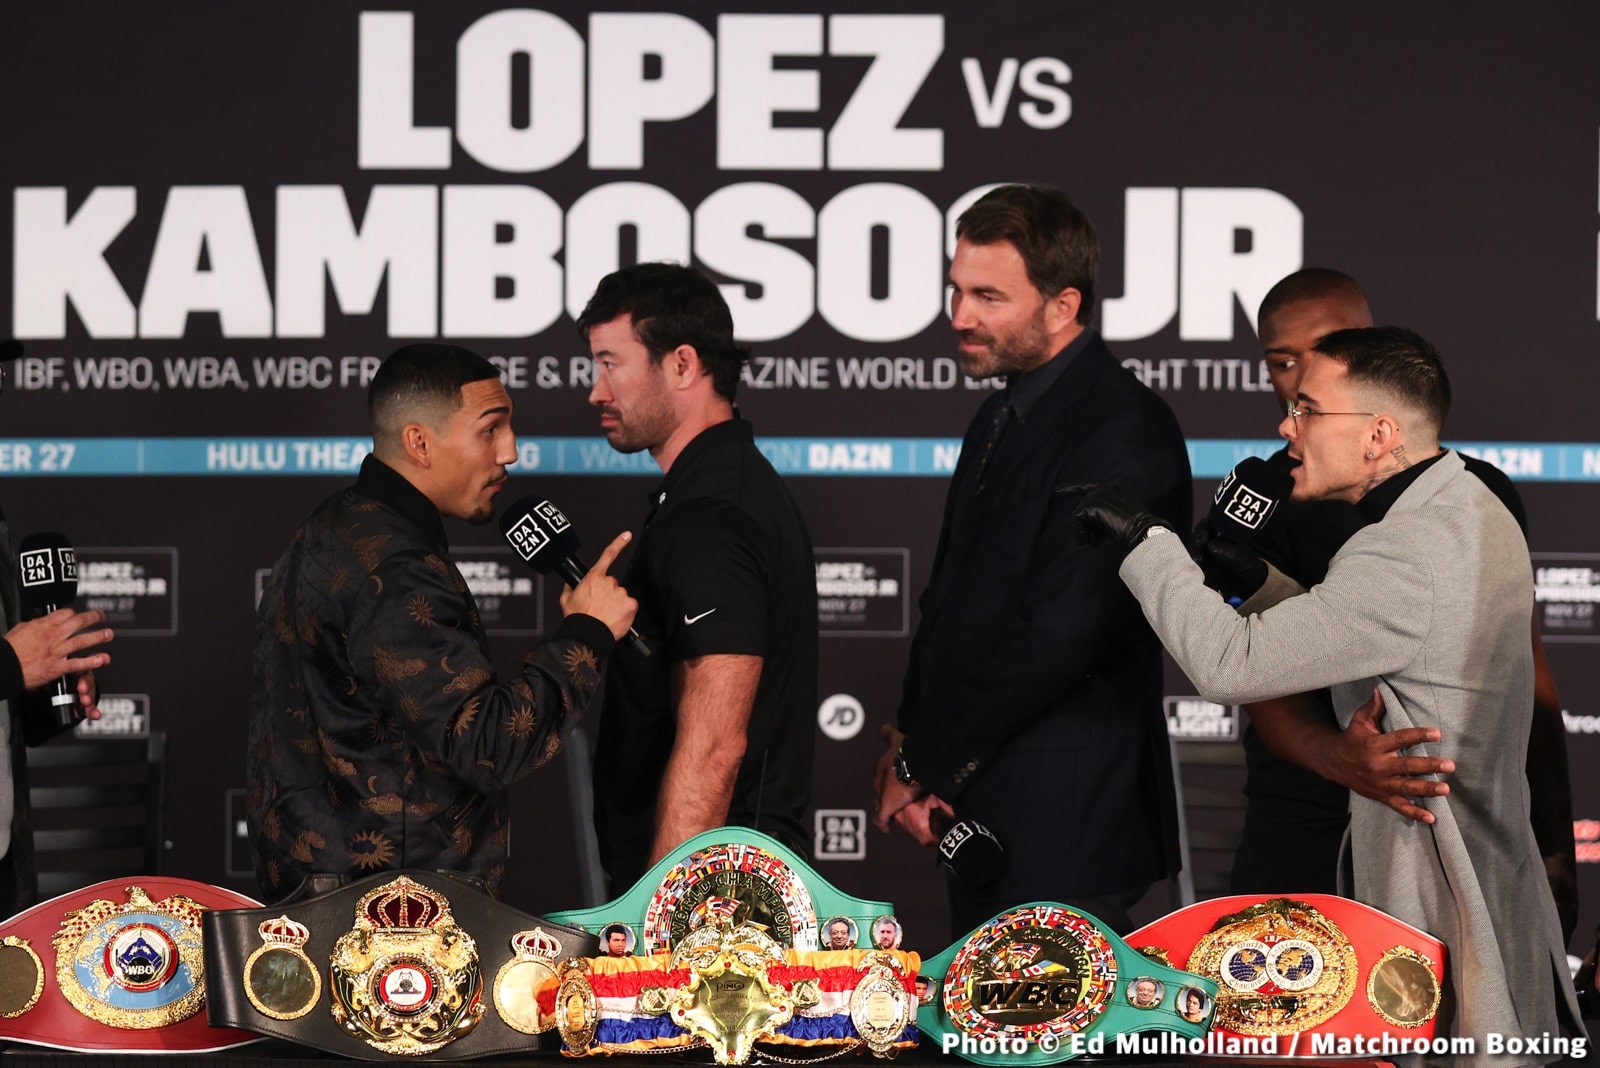 Image: Lopez Jr. vs. Kambosos Jr. - press quotes & photos